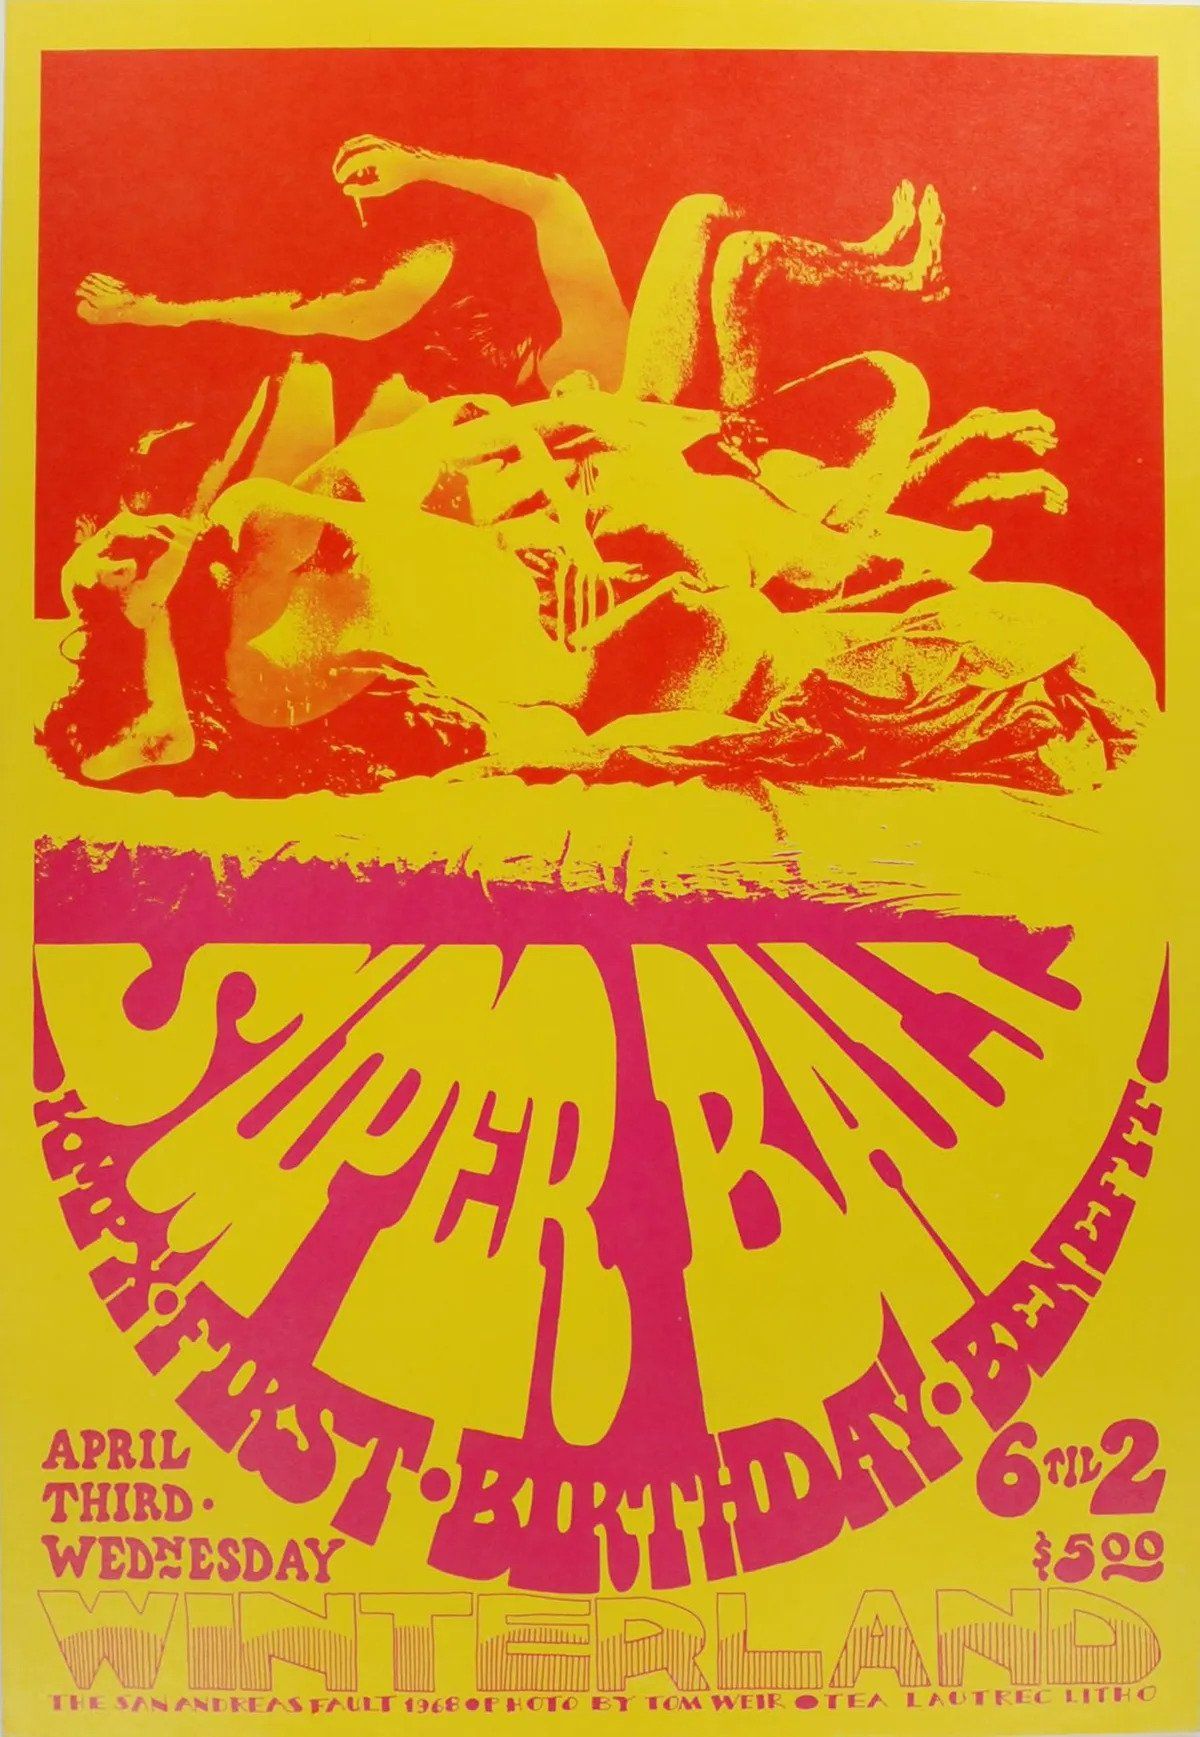 Grateful Dead Superball Birthday Benefit Winterland 1968 Concert Poster